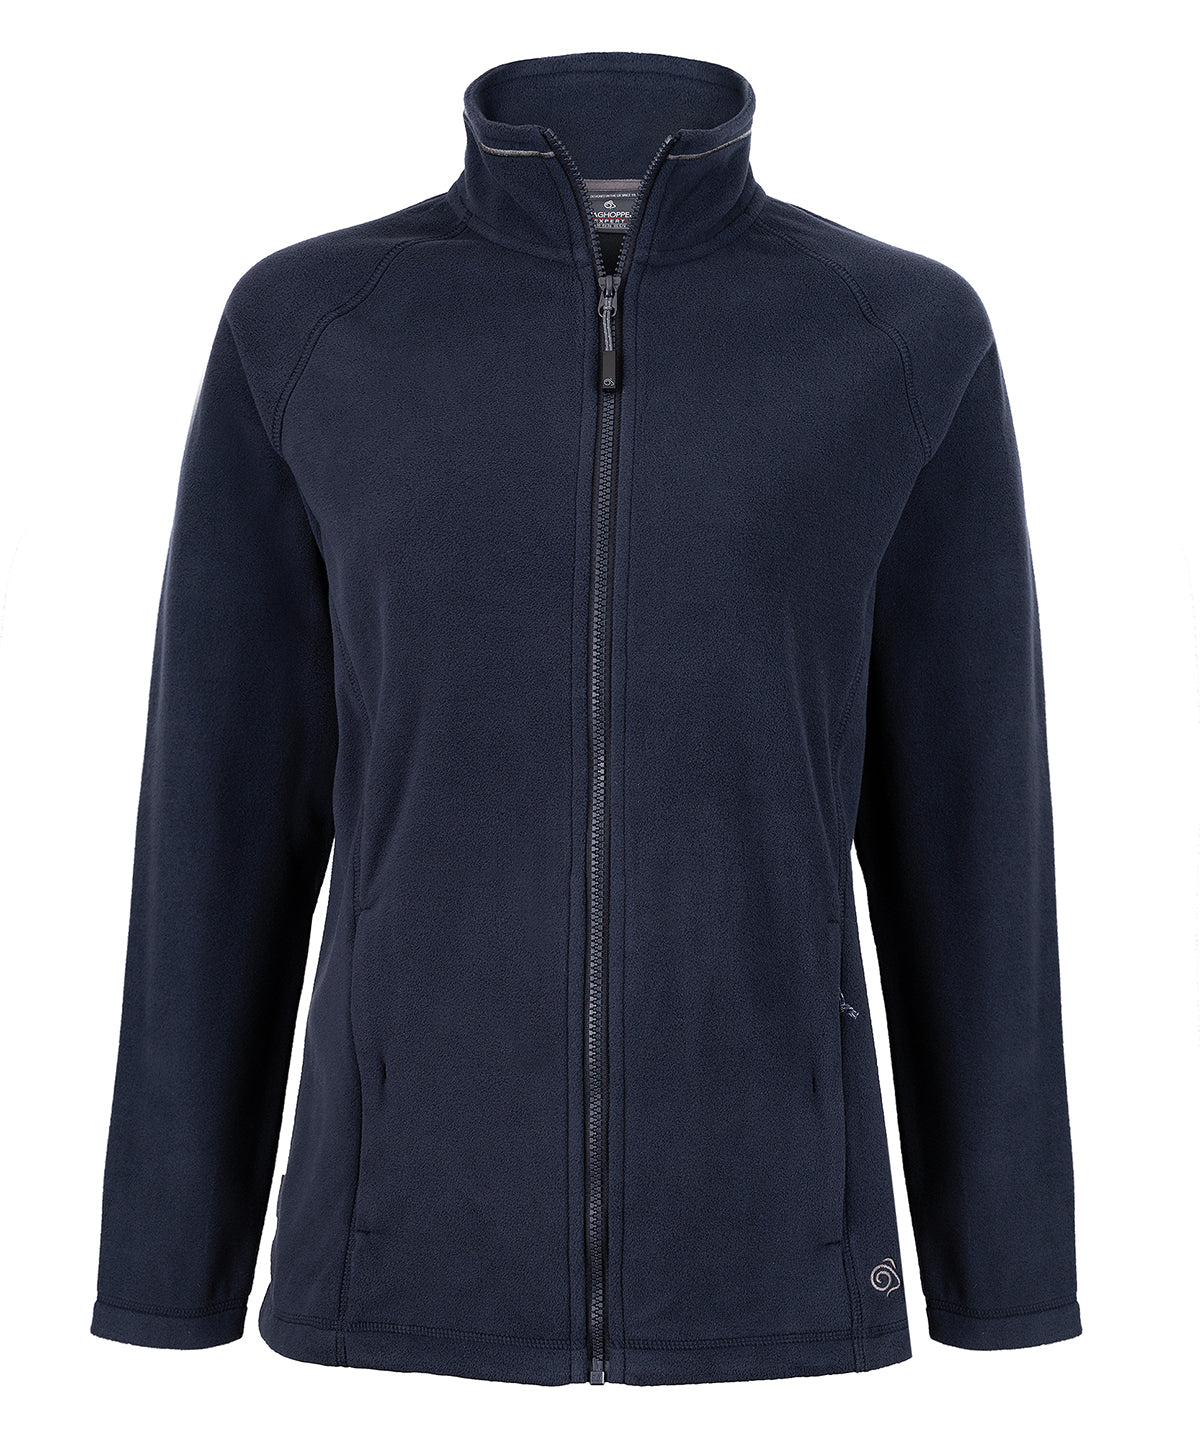 Personalised Jackets - Black Craghoppers Expert women’s Miska 200 fleece jacket